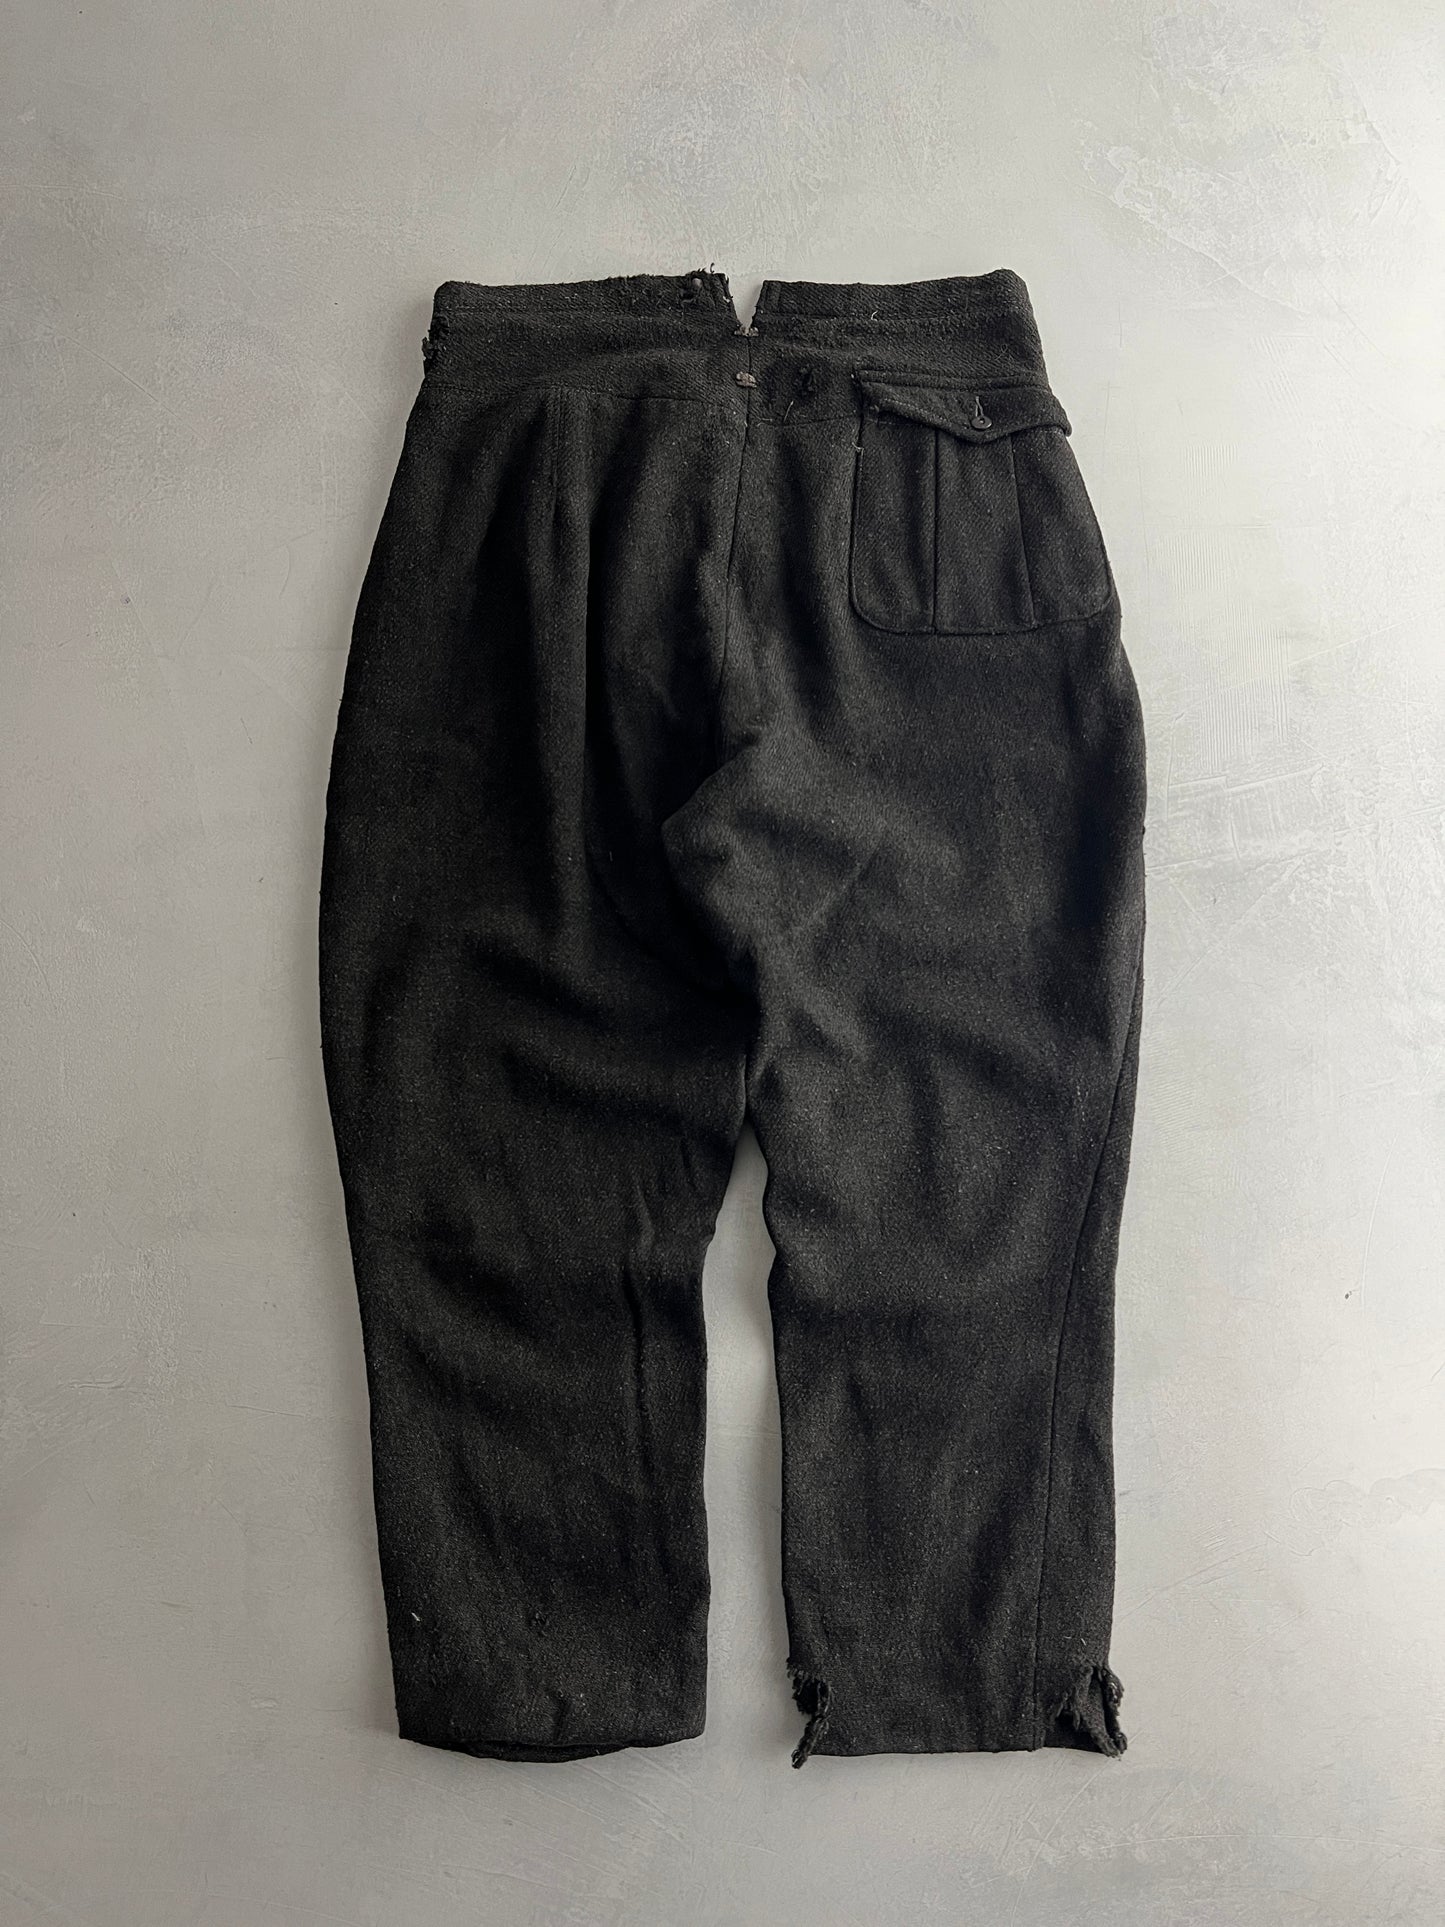 Overdyed Japanese Work Pants [33"]